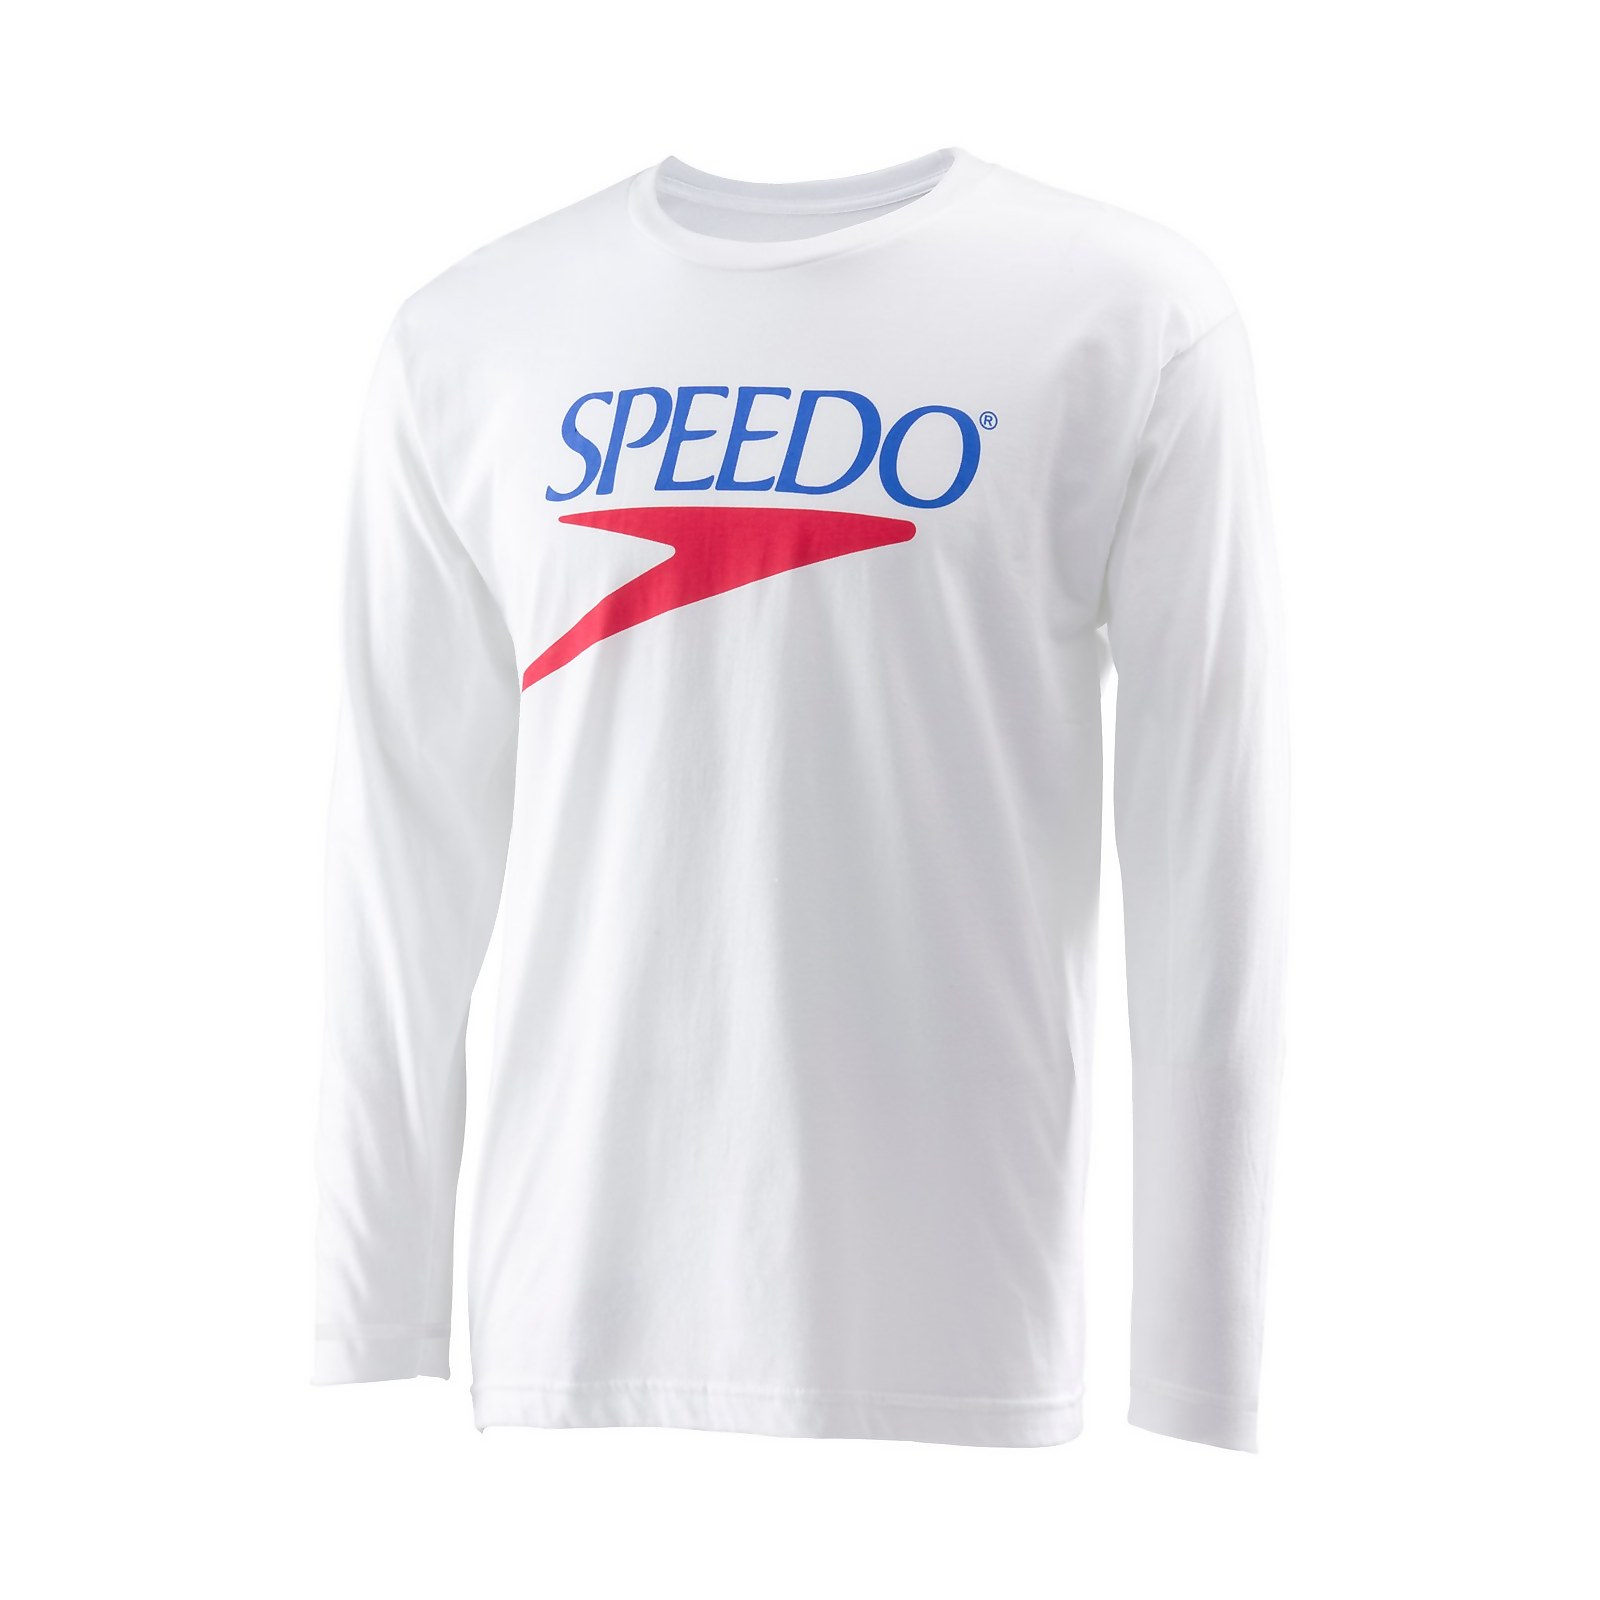 Speedo  Vintage Logo Long Sleeve Tee - L    : White